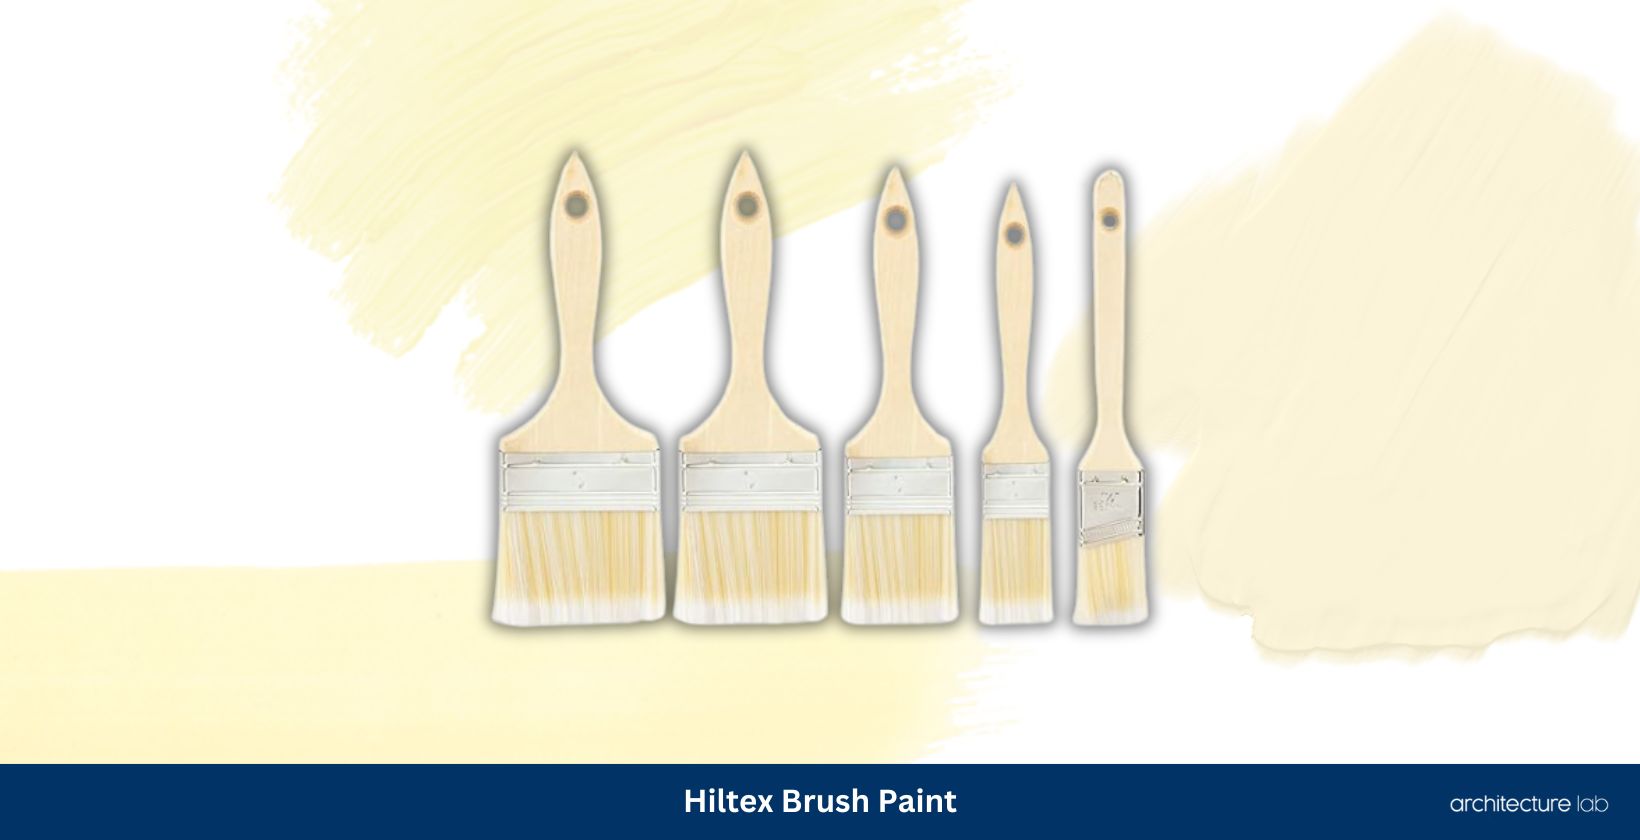 Hiltex brush paint